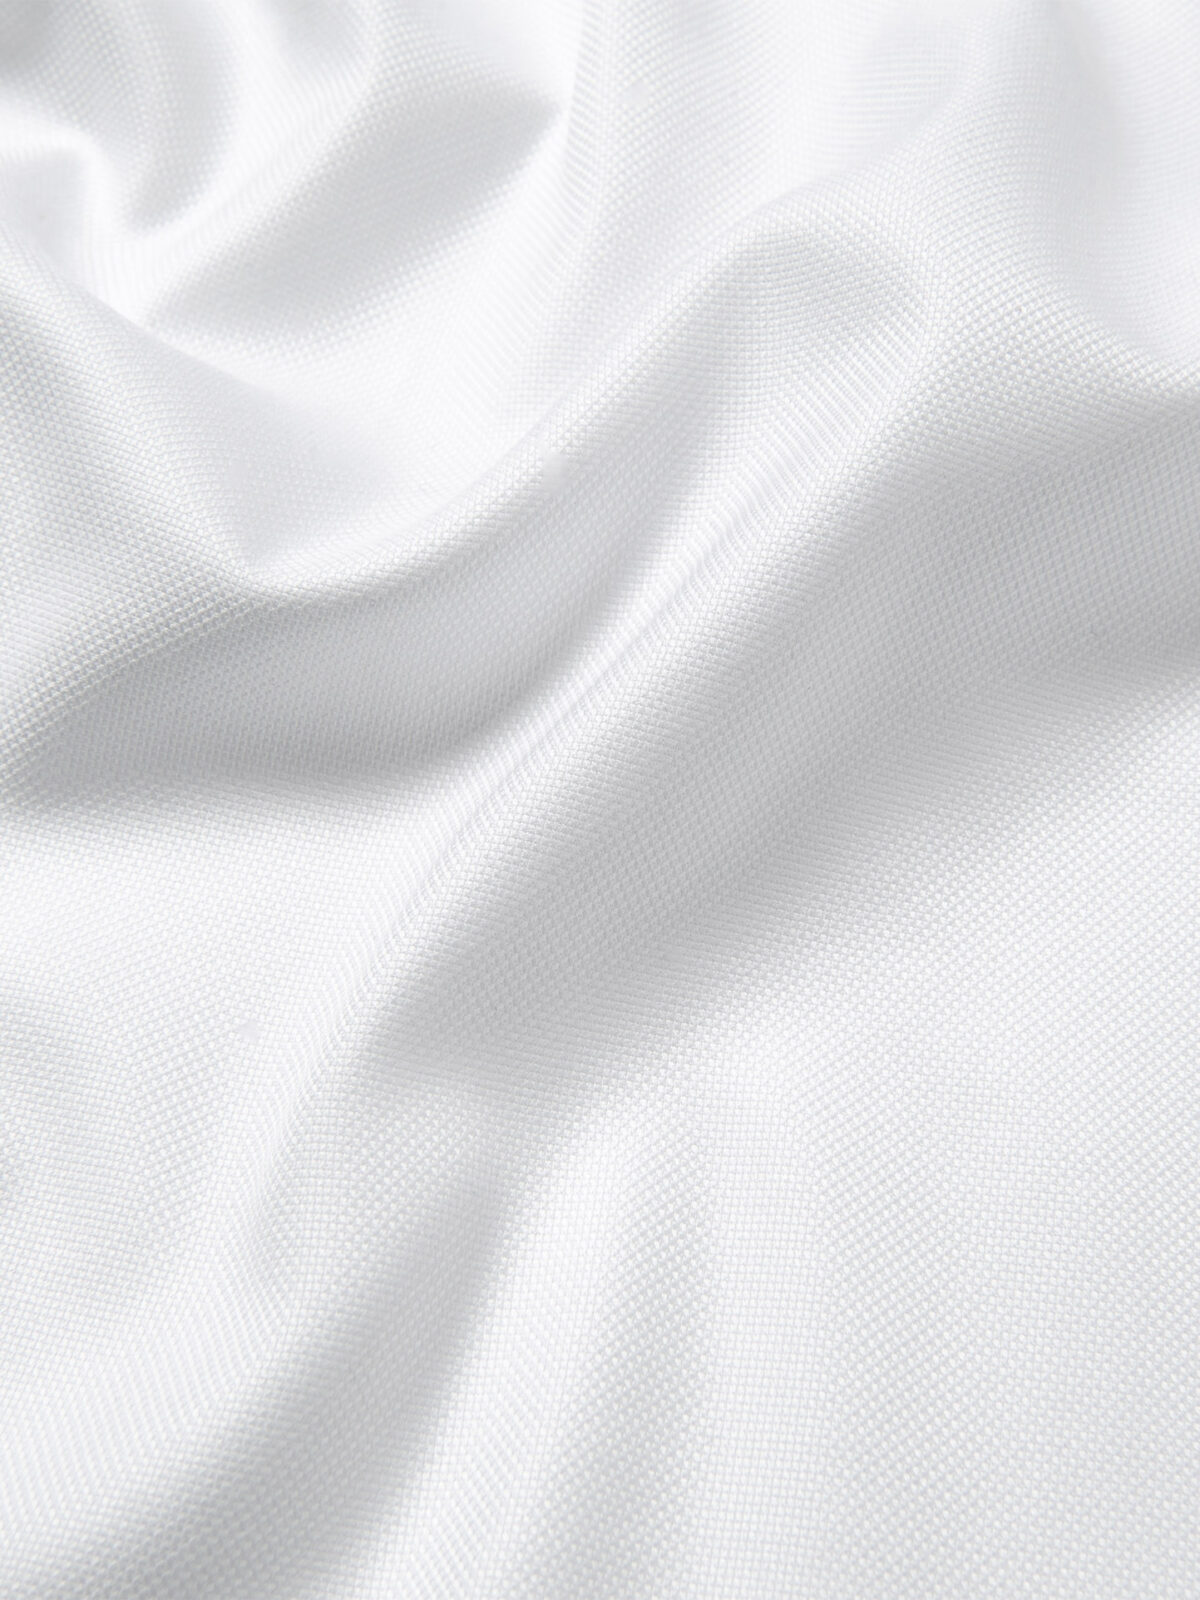 Trending LV Premium Tshirt ,Cotton fabric